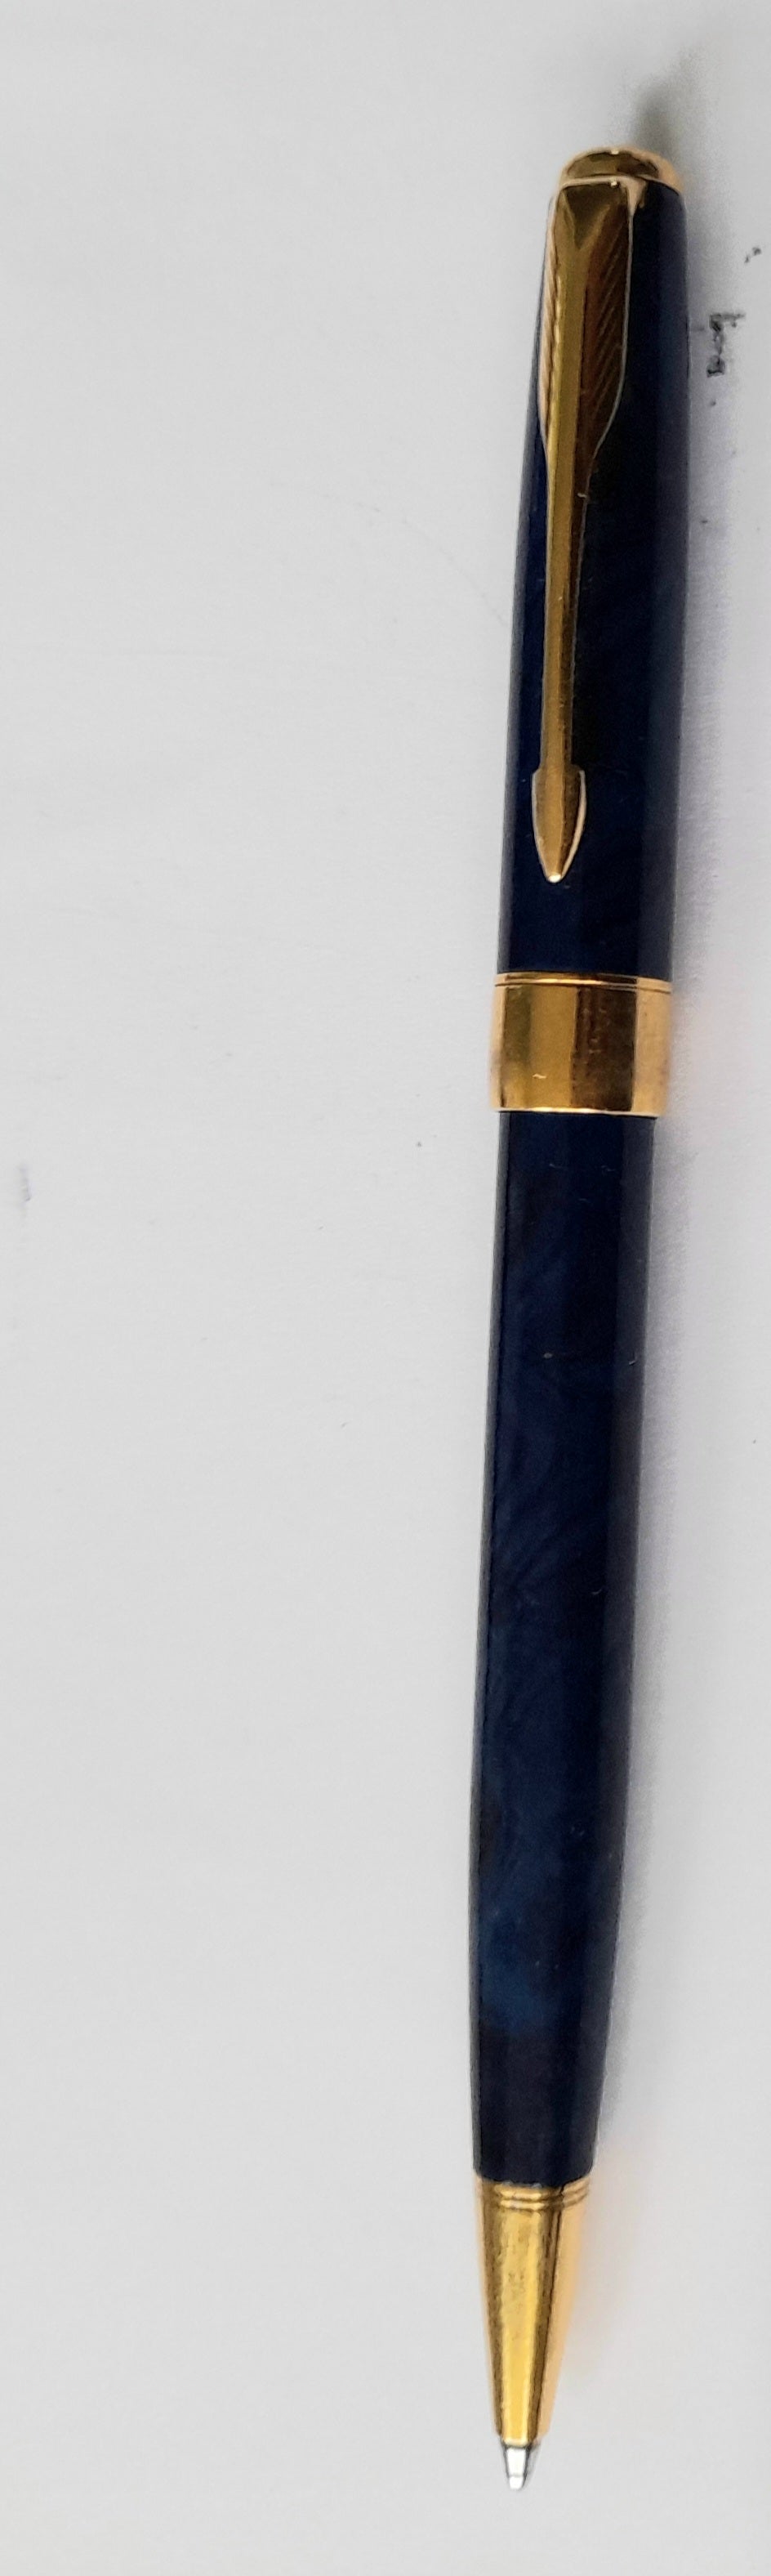 Parker Sonnet N France BallPoint Pen Blue Lacquer body Gold plated